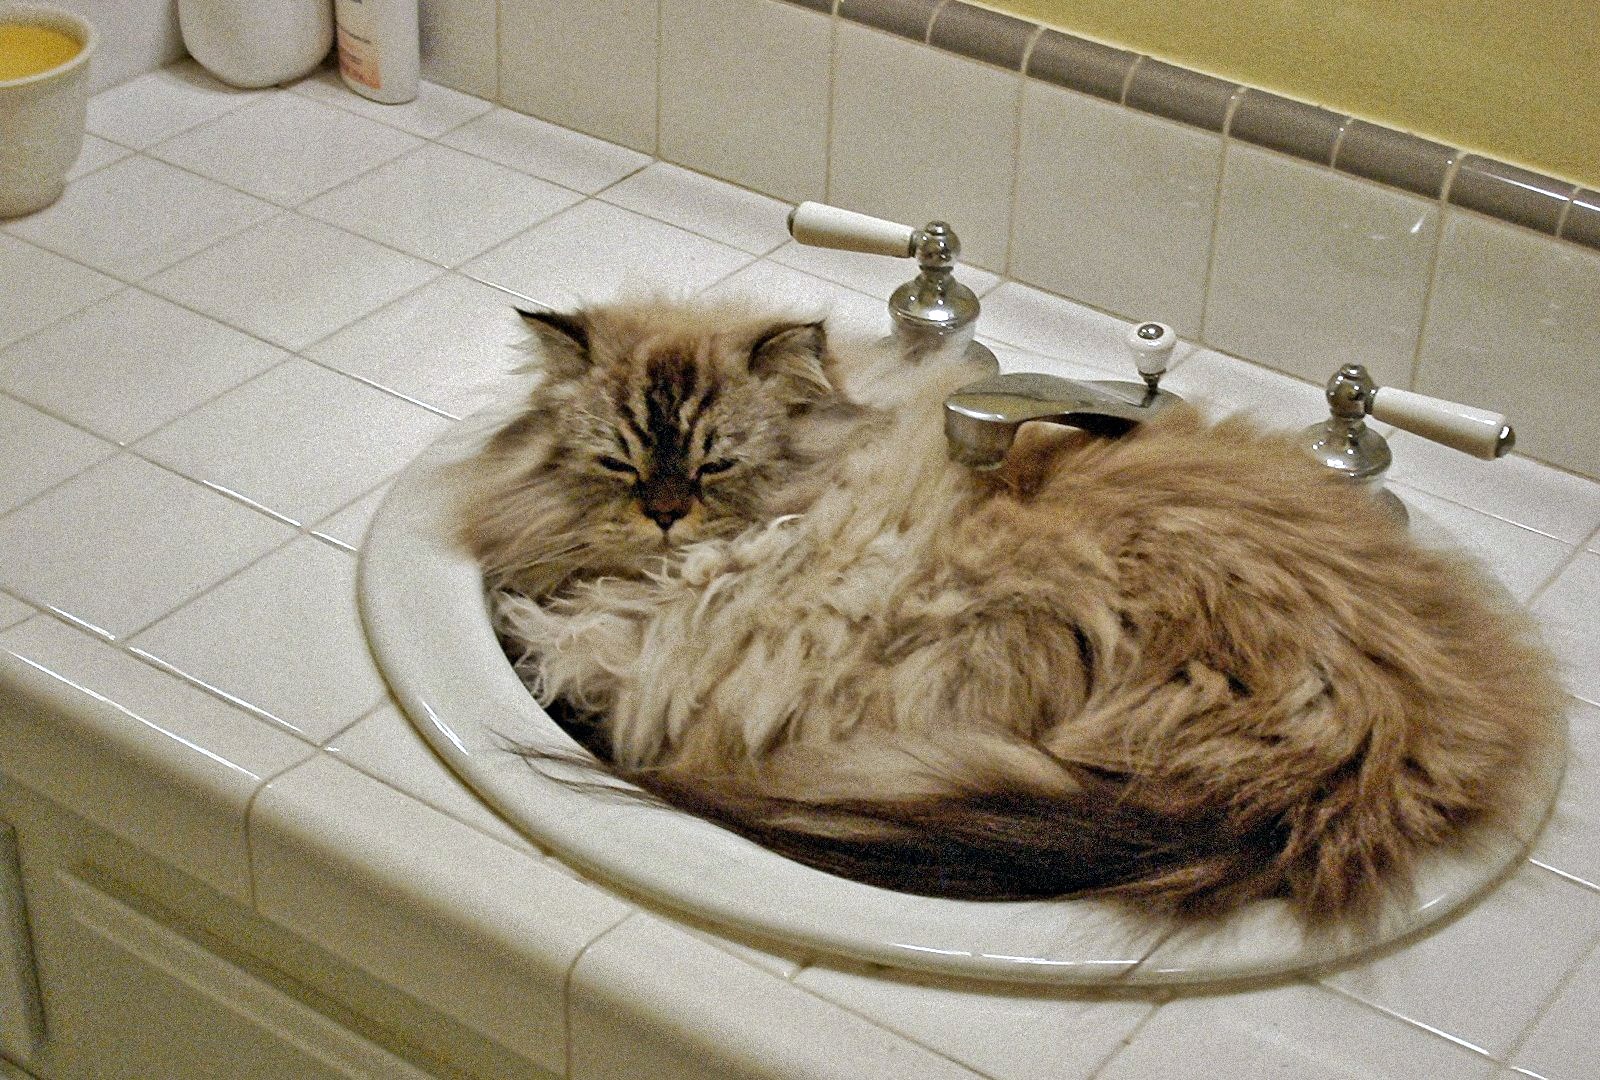 00 cat in the sink. 15.03.15